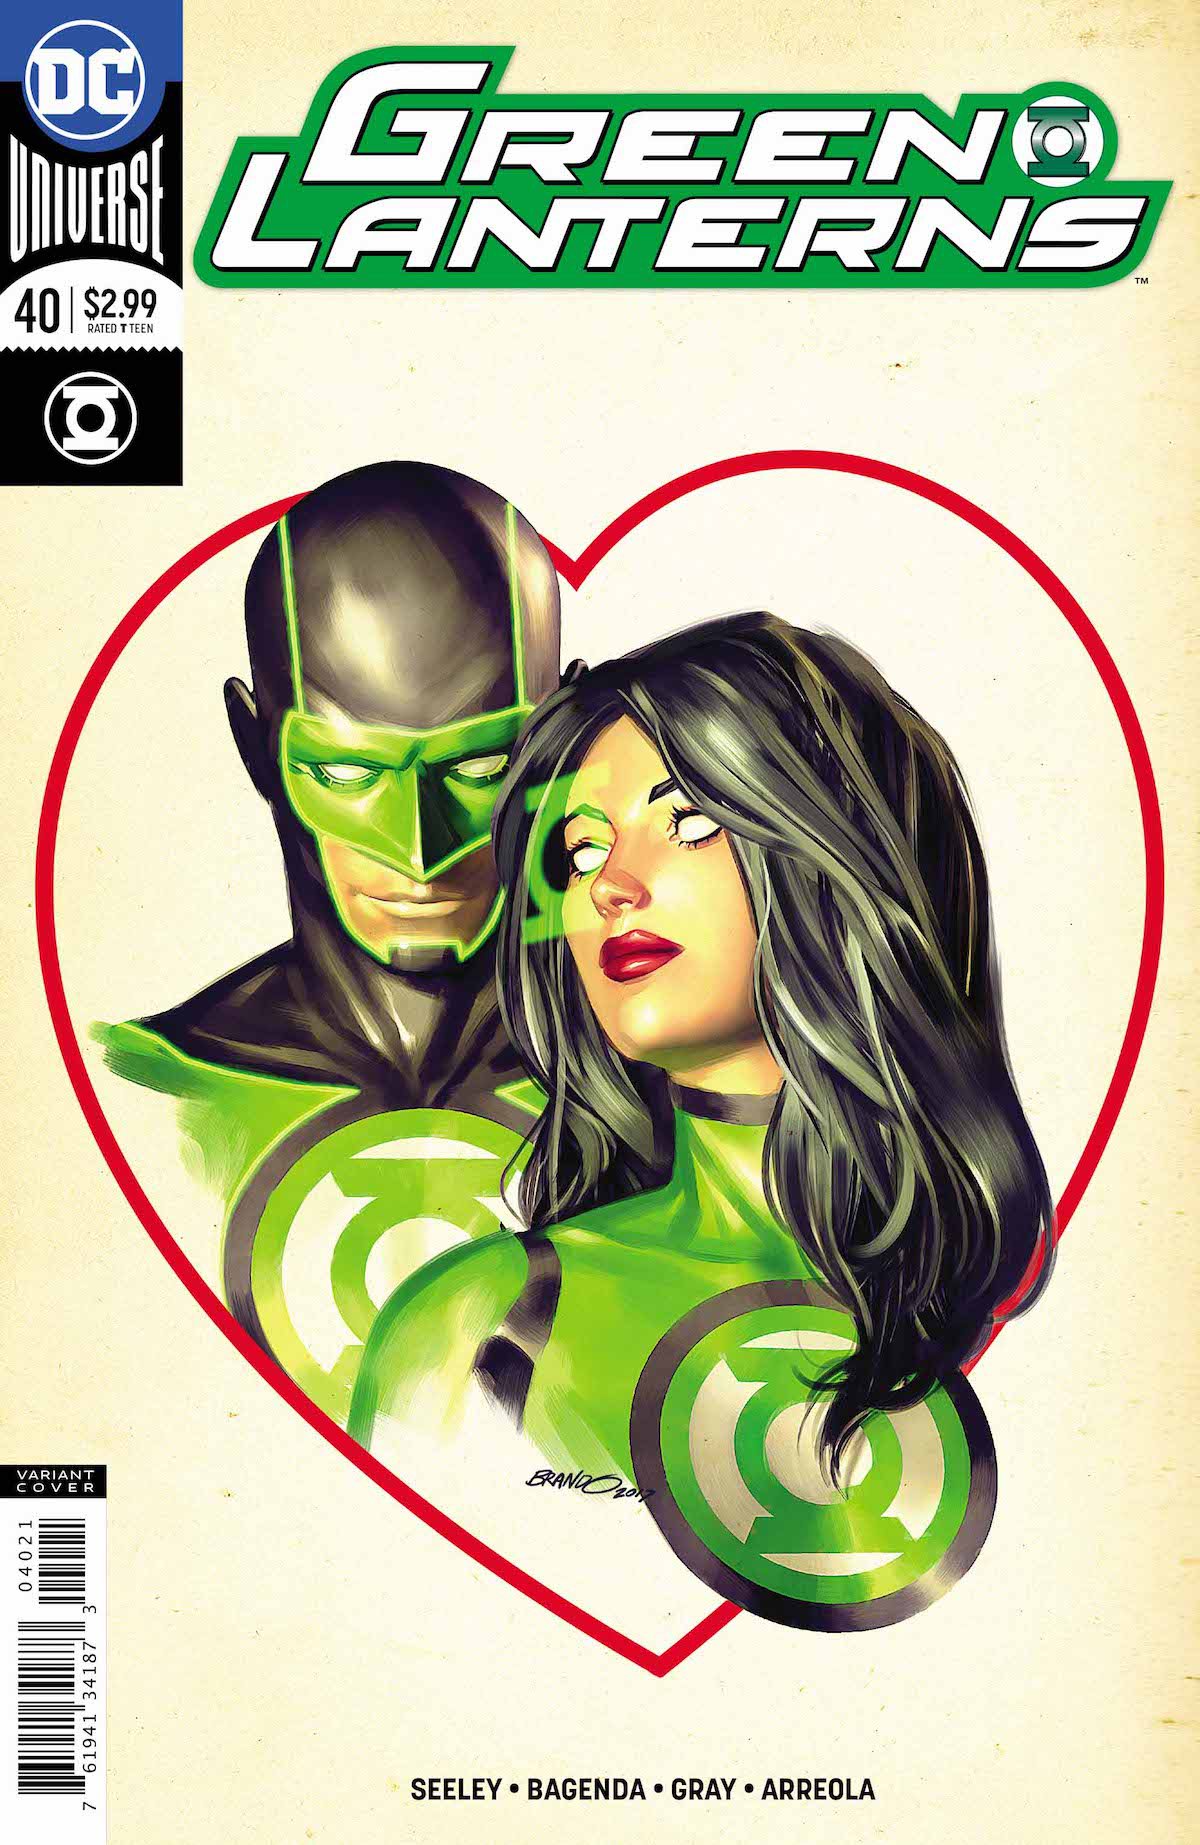 Green Lanterns #40 variant cover